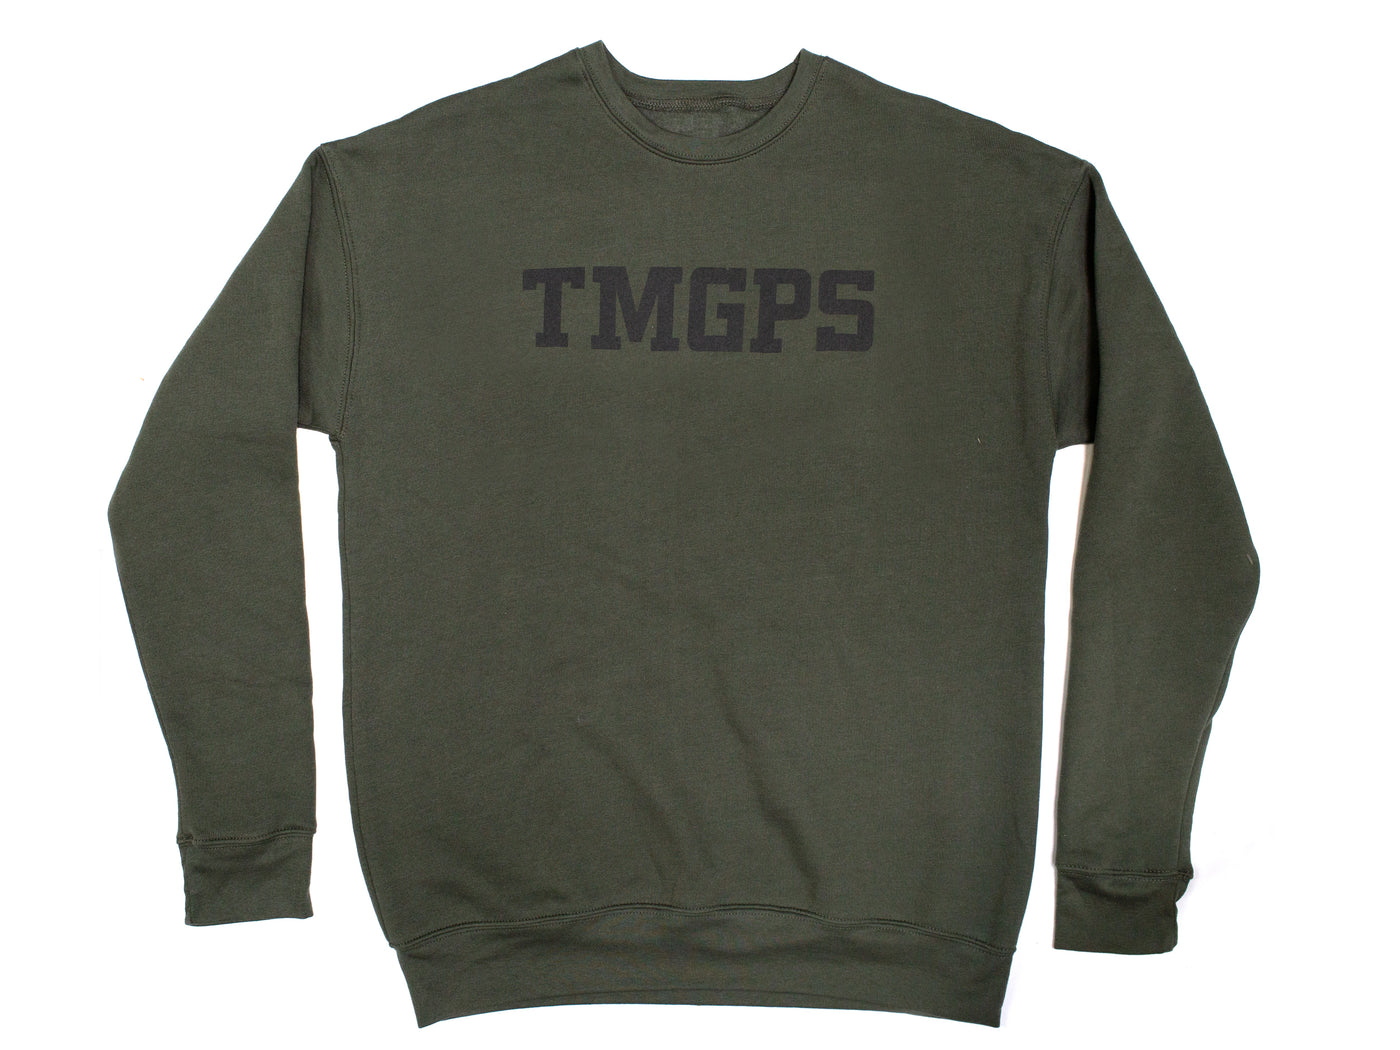 TMGPS Varsity Sweatshirt